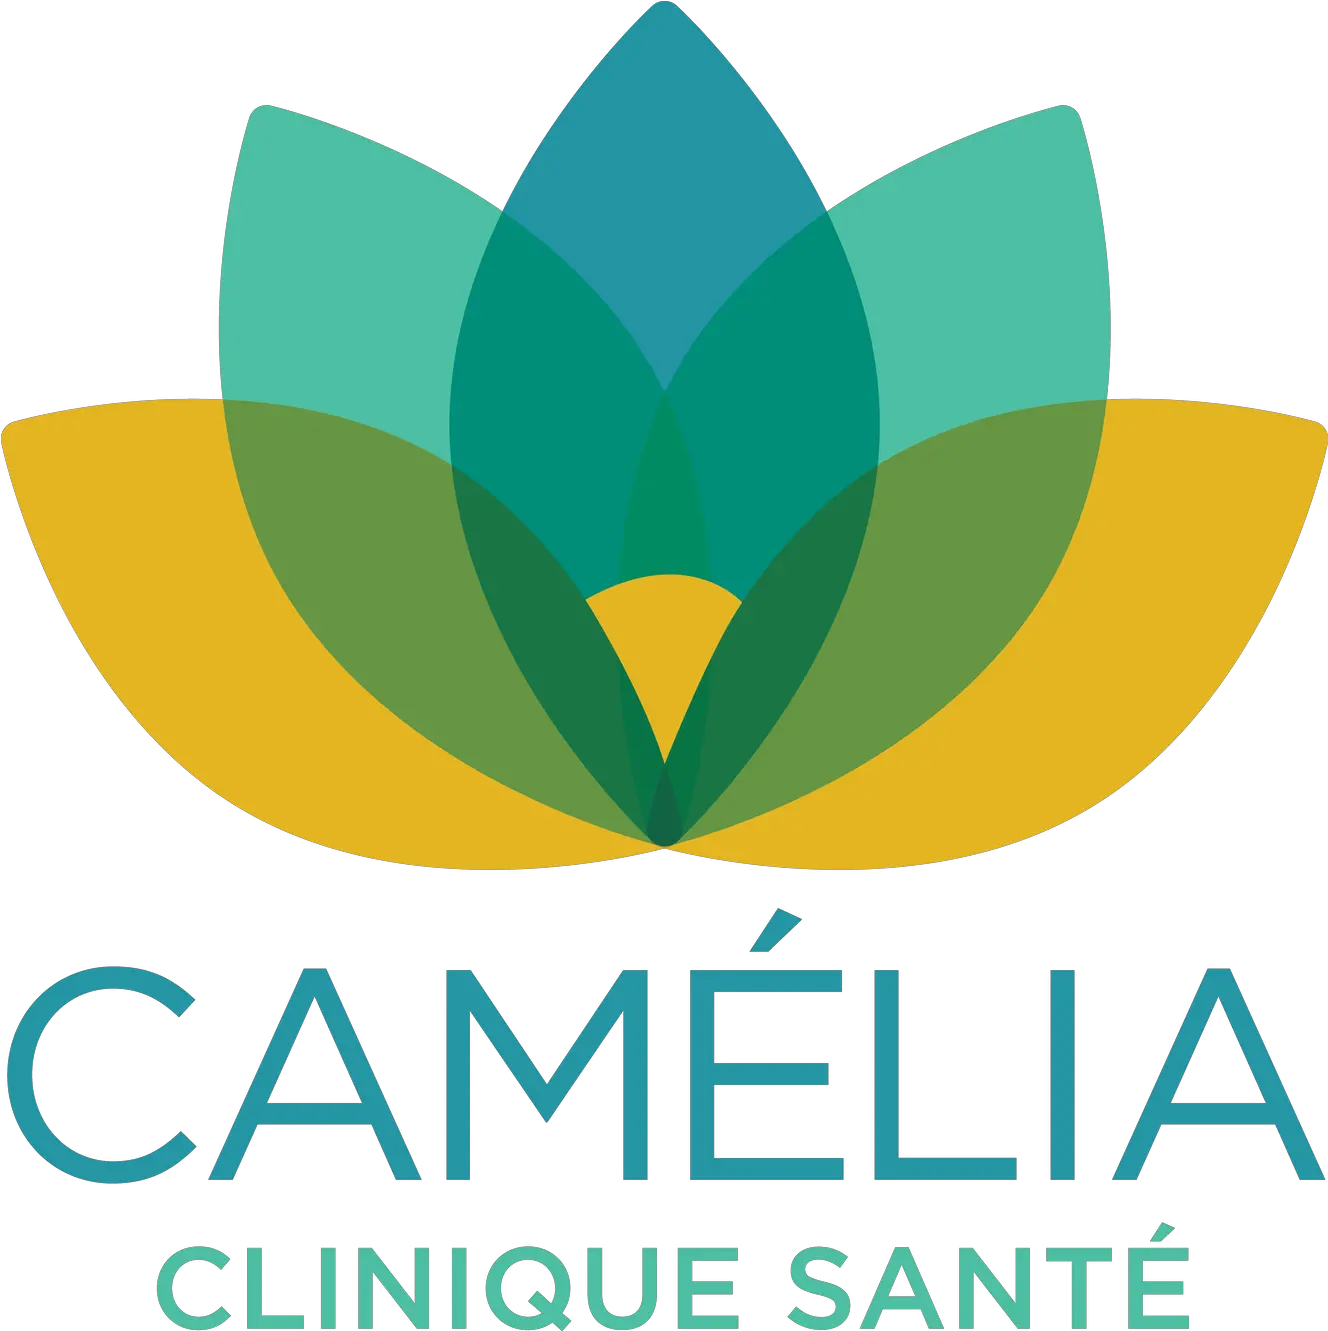 Camelia Clinique Sante Montreal Graphic Design Png Clinique Logo